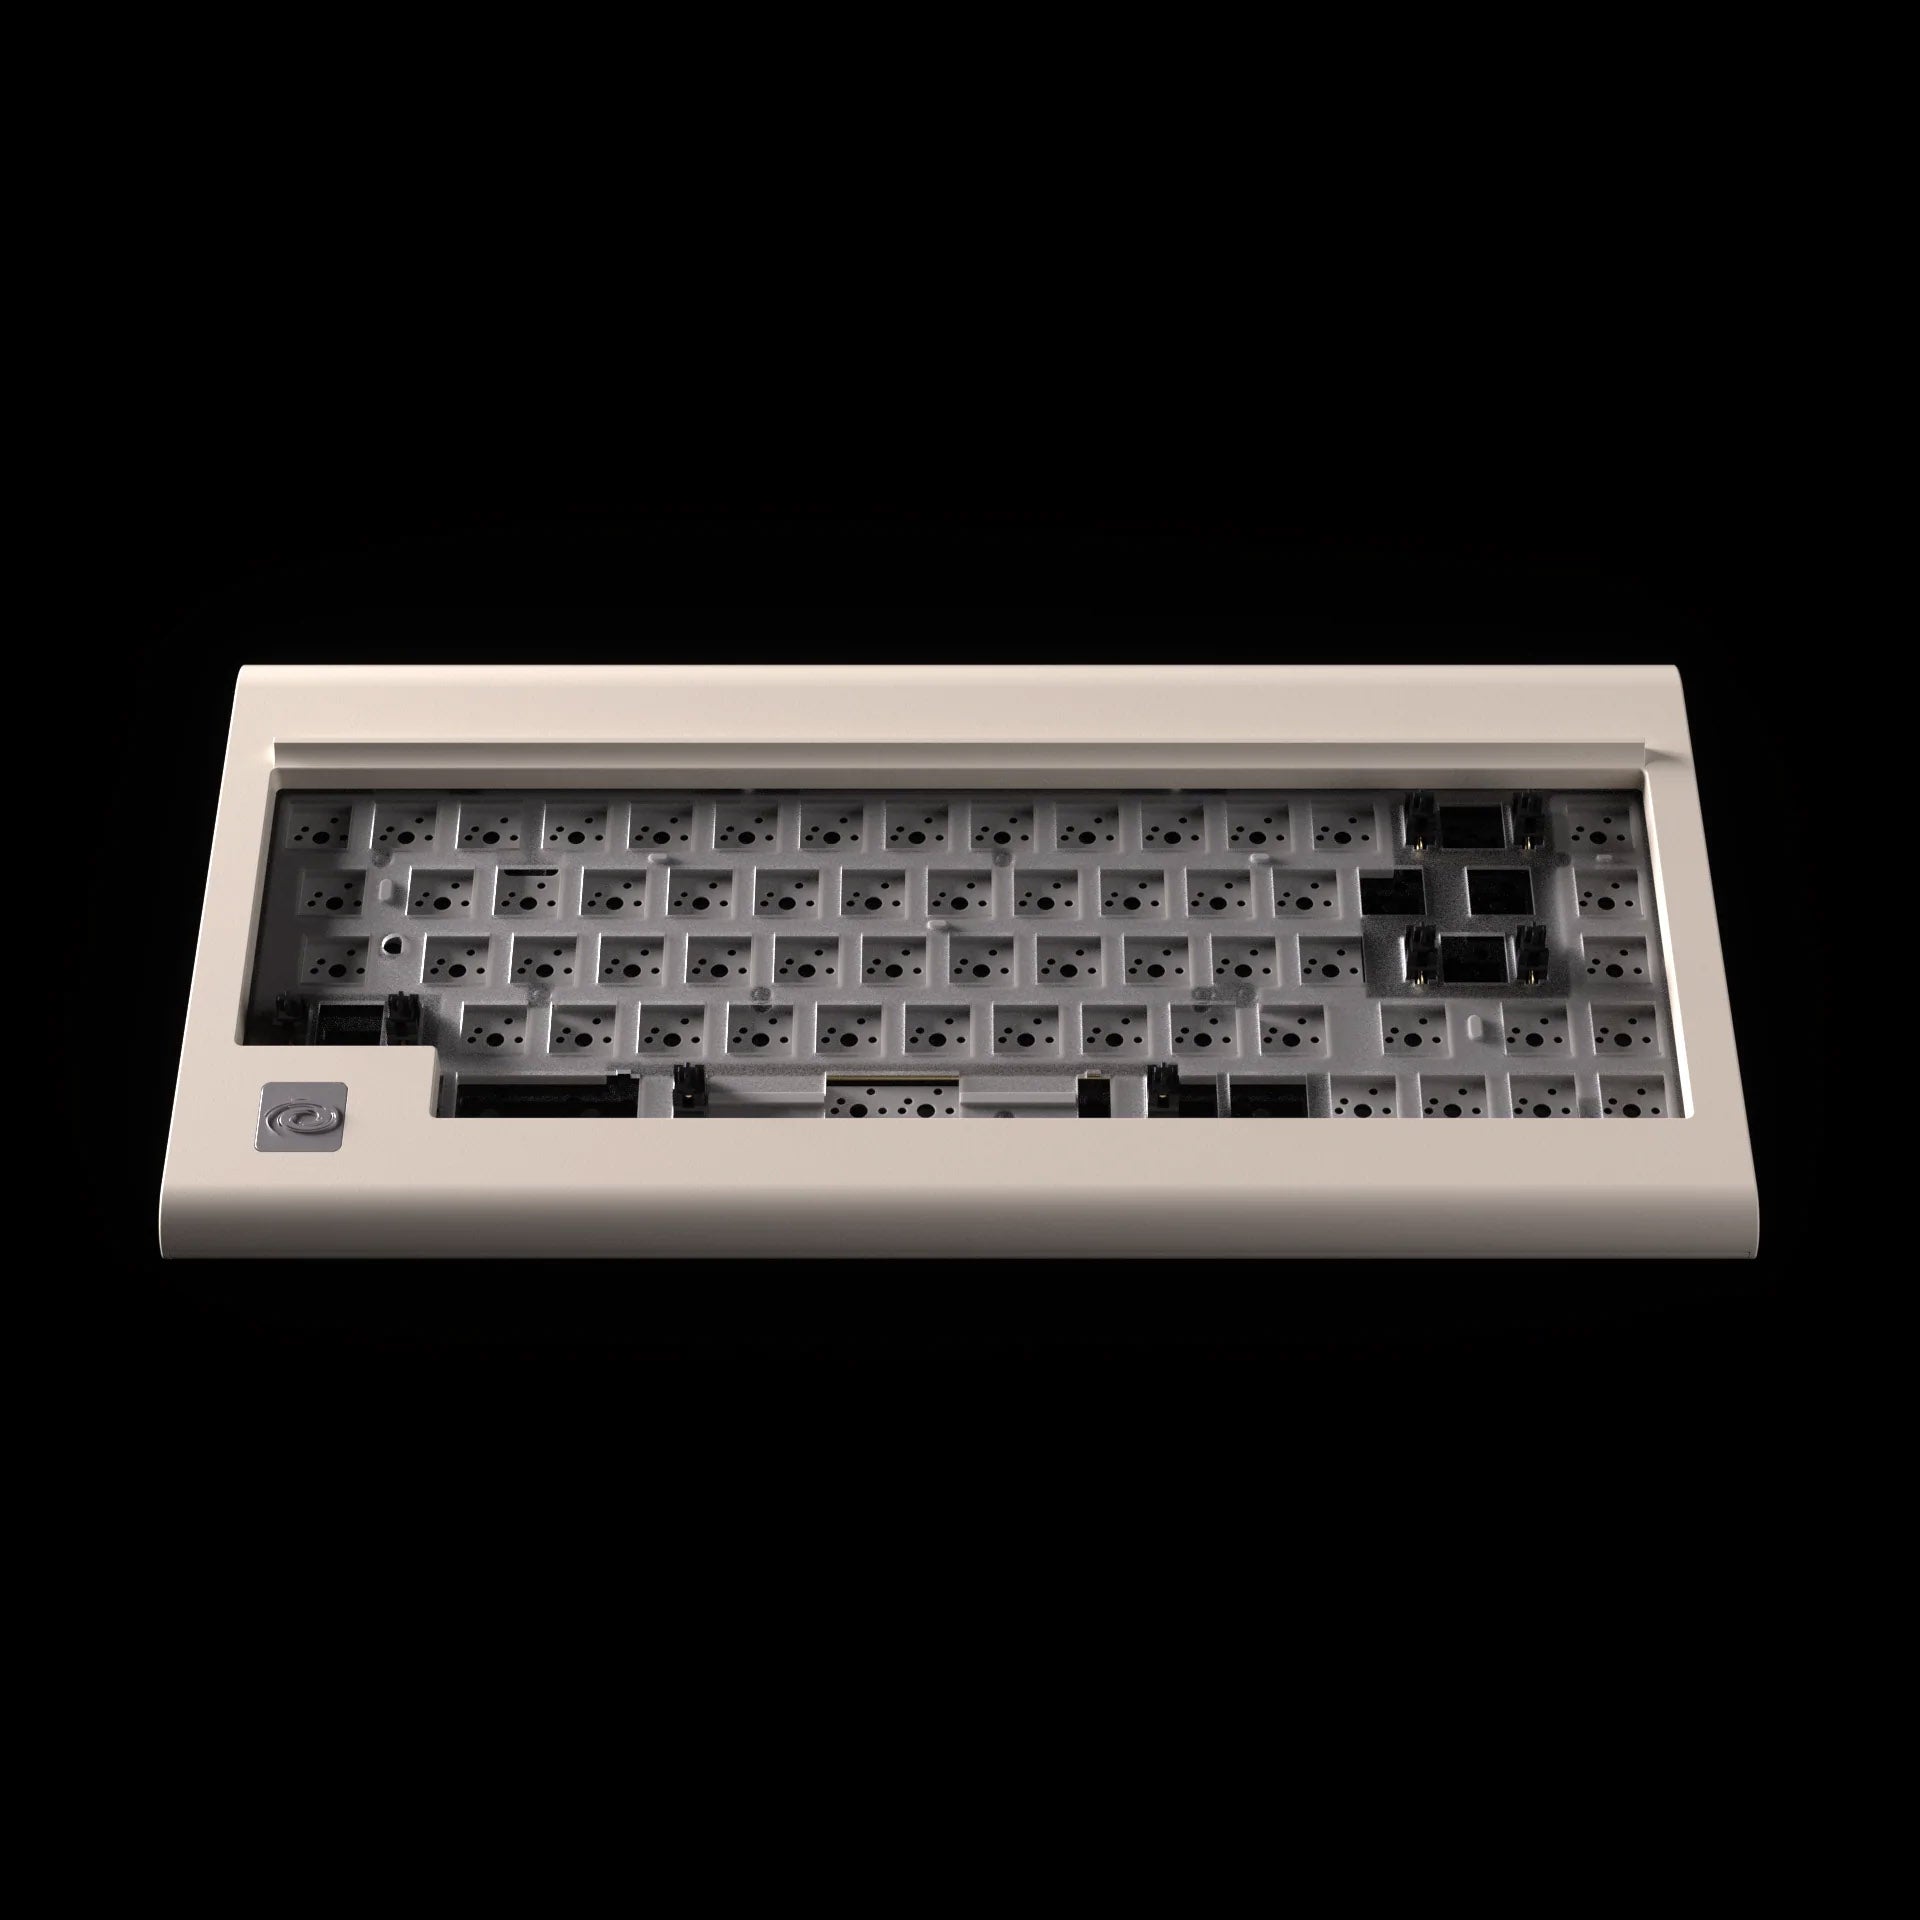 Vortex PC66 Beige Barebones 66-Key Mechanical Keyboard